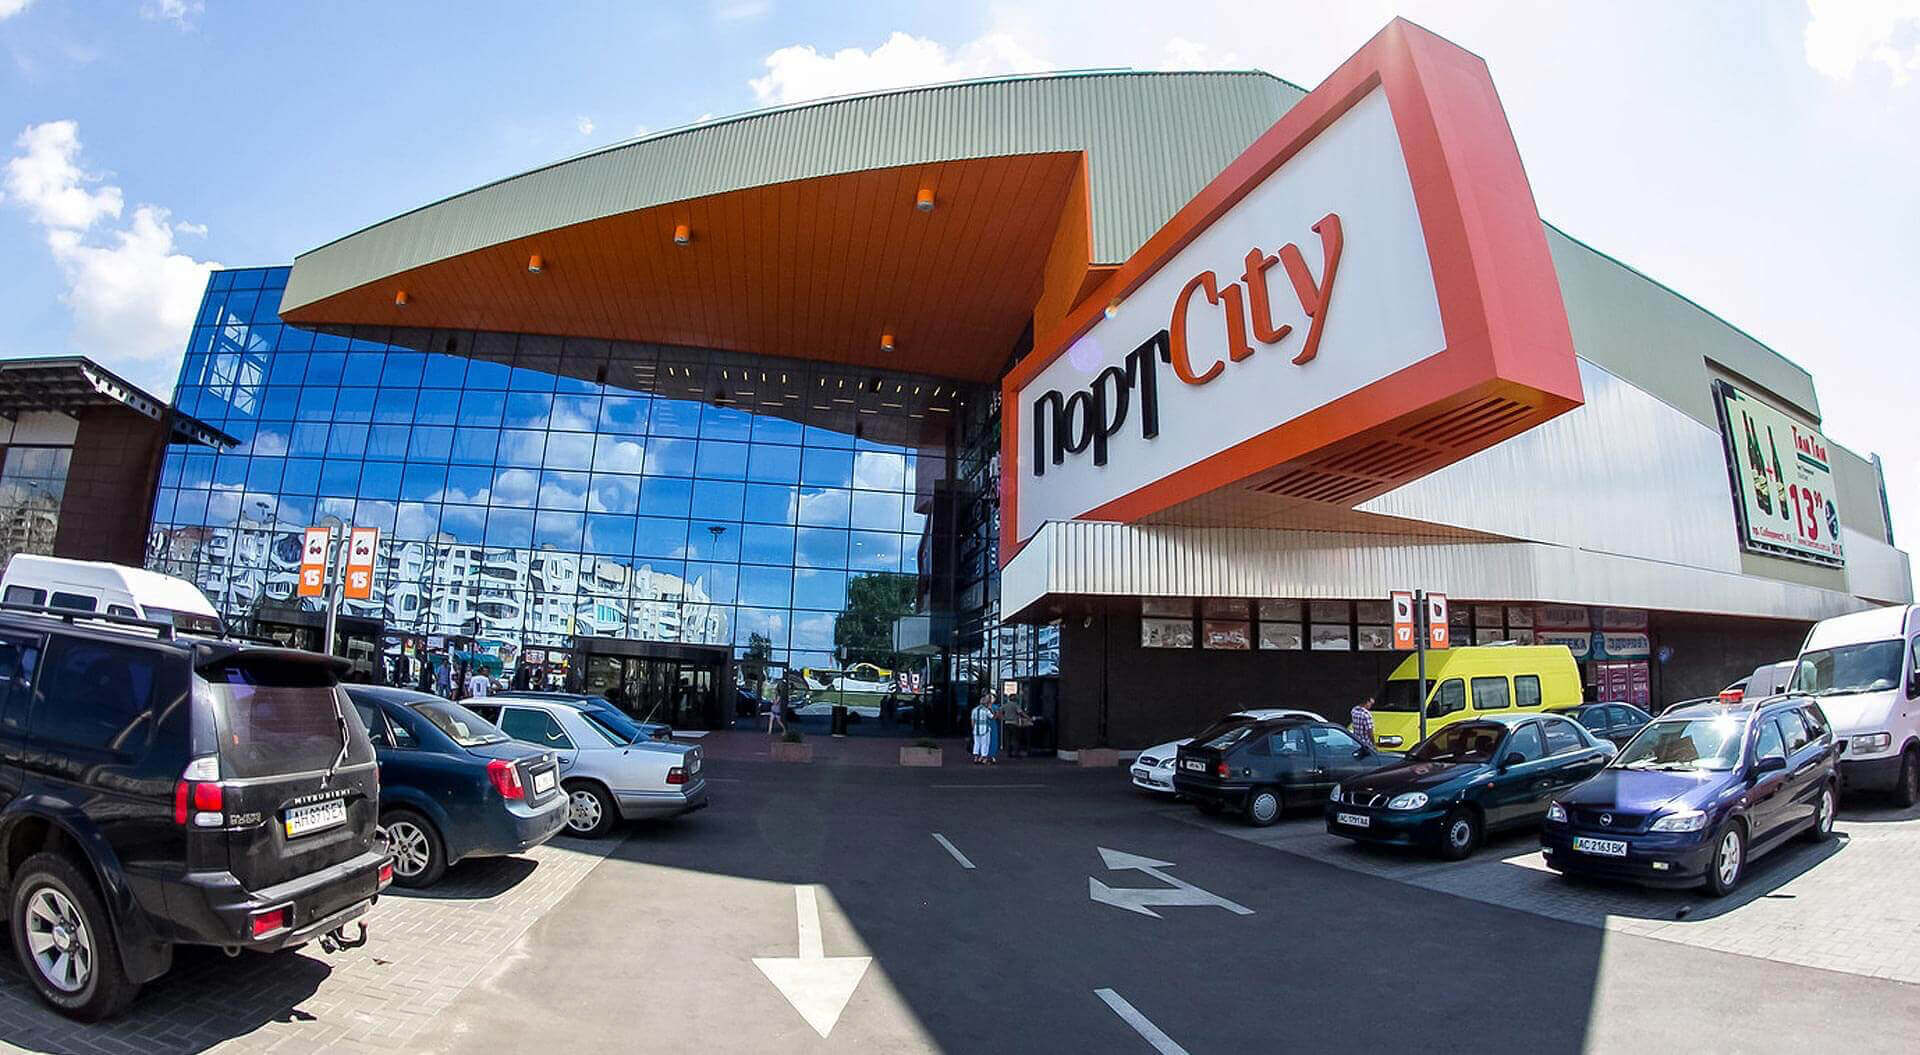 Port City Shopping Mall branding and customer car park navigation system